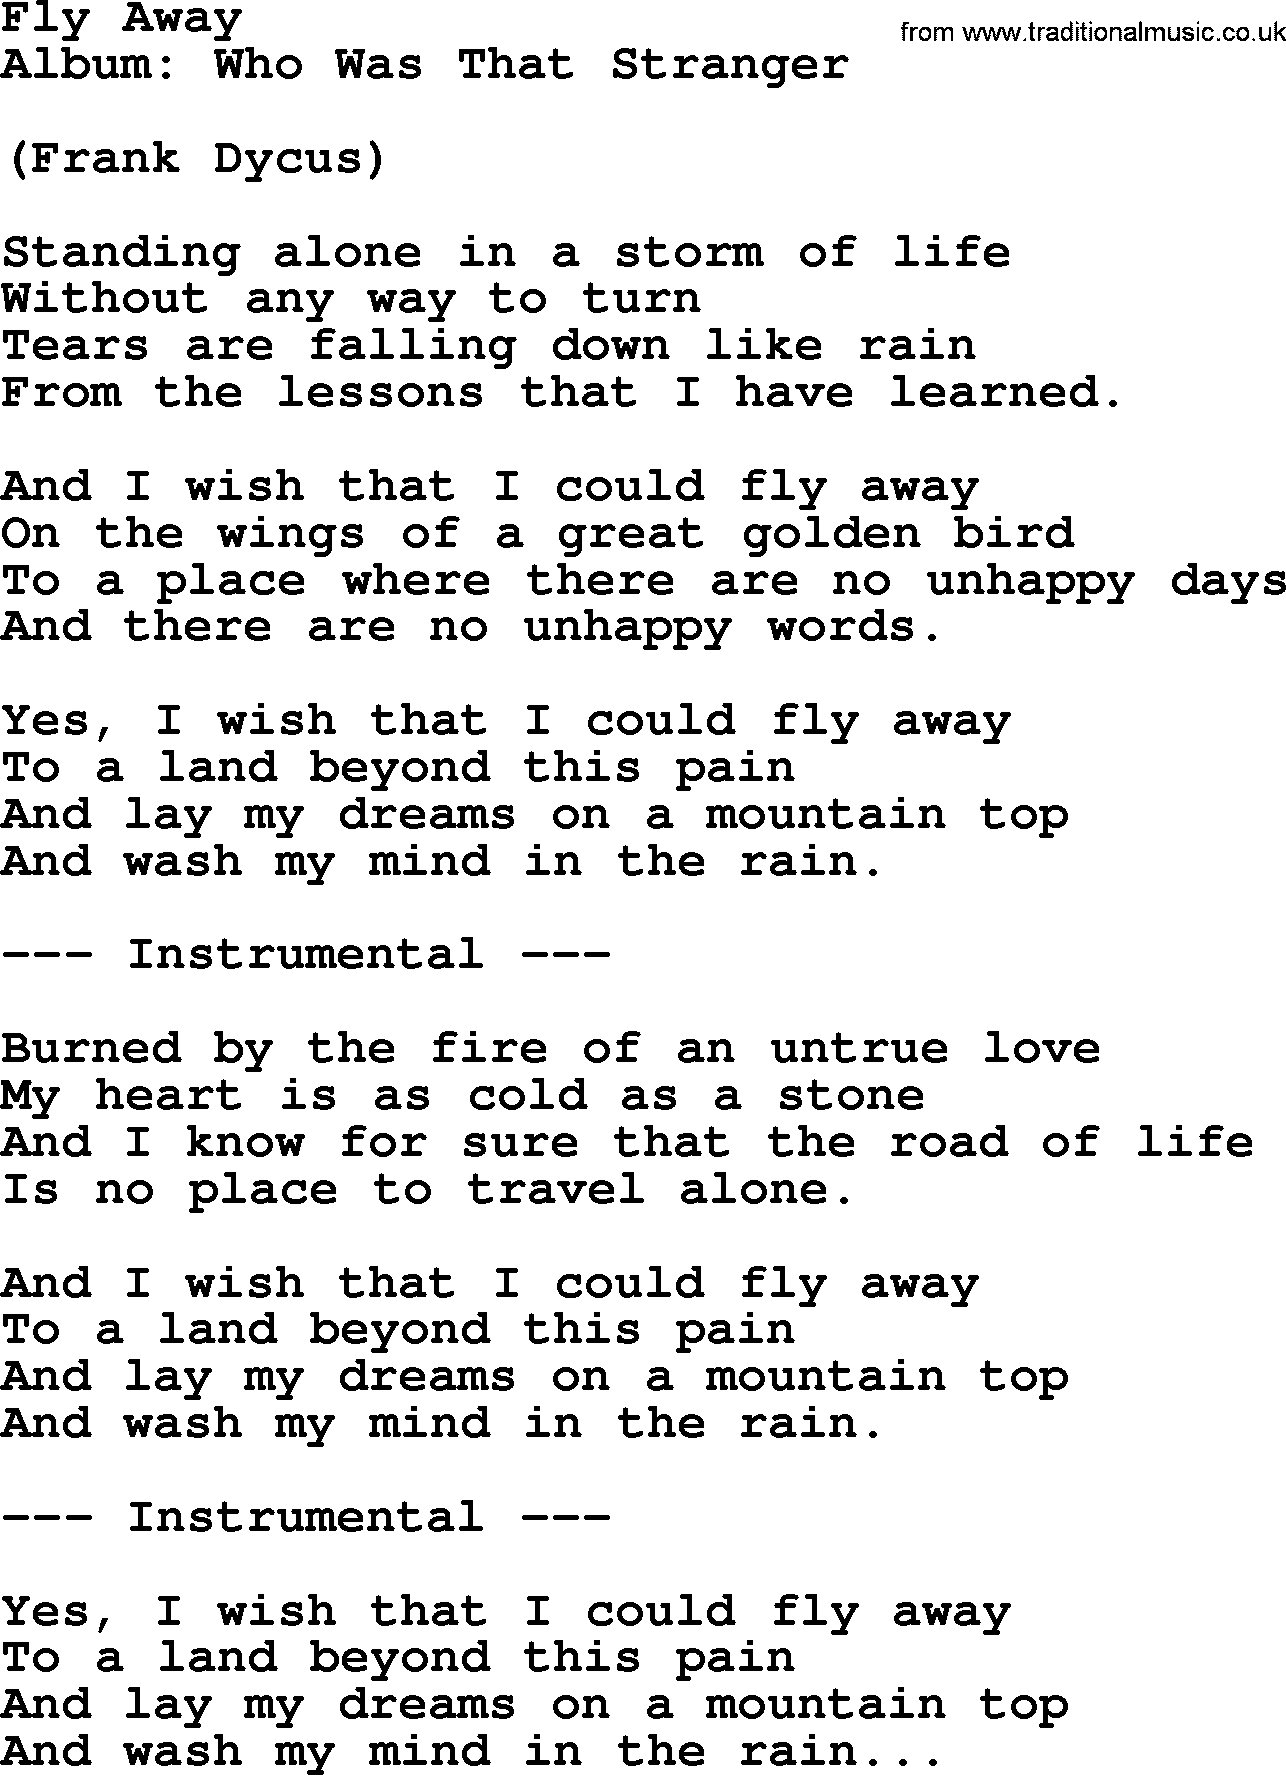 Loretta Lynn song: Fly Away lyrics